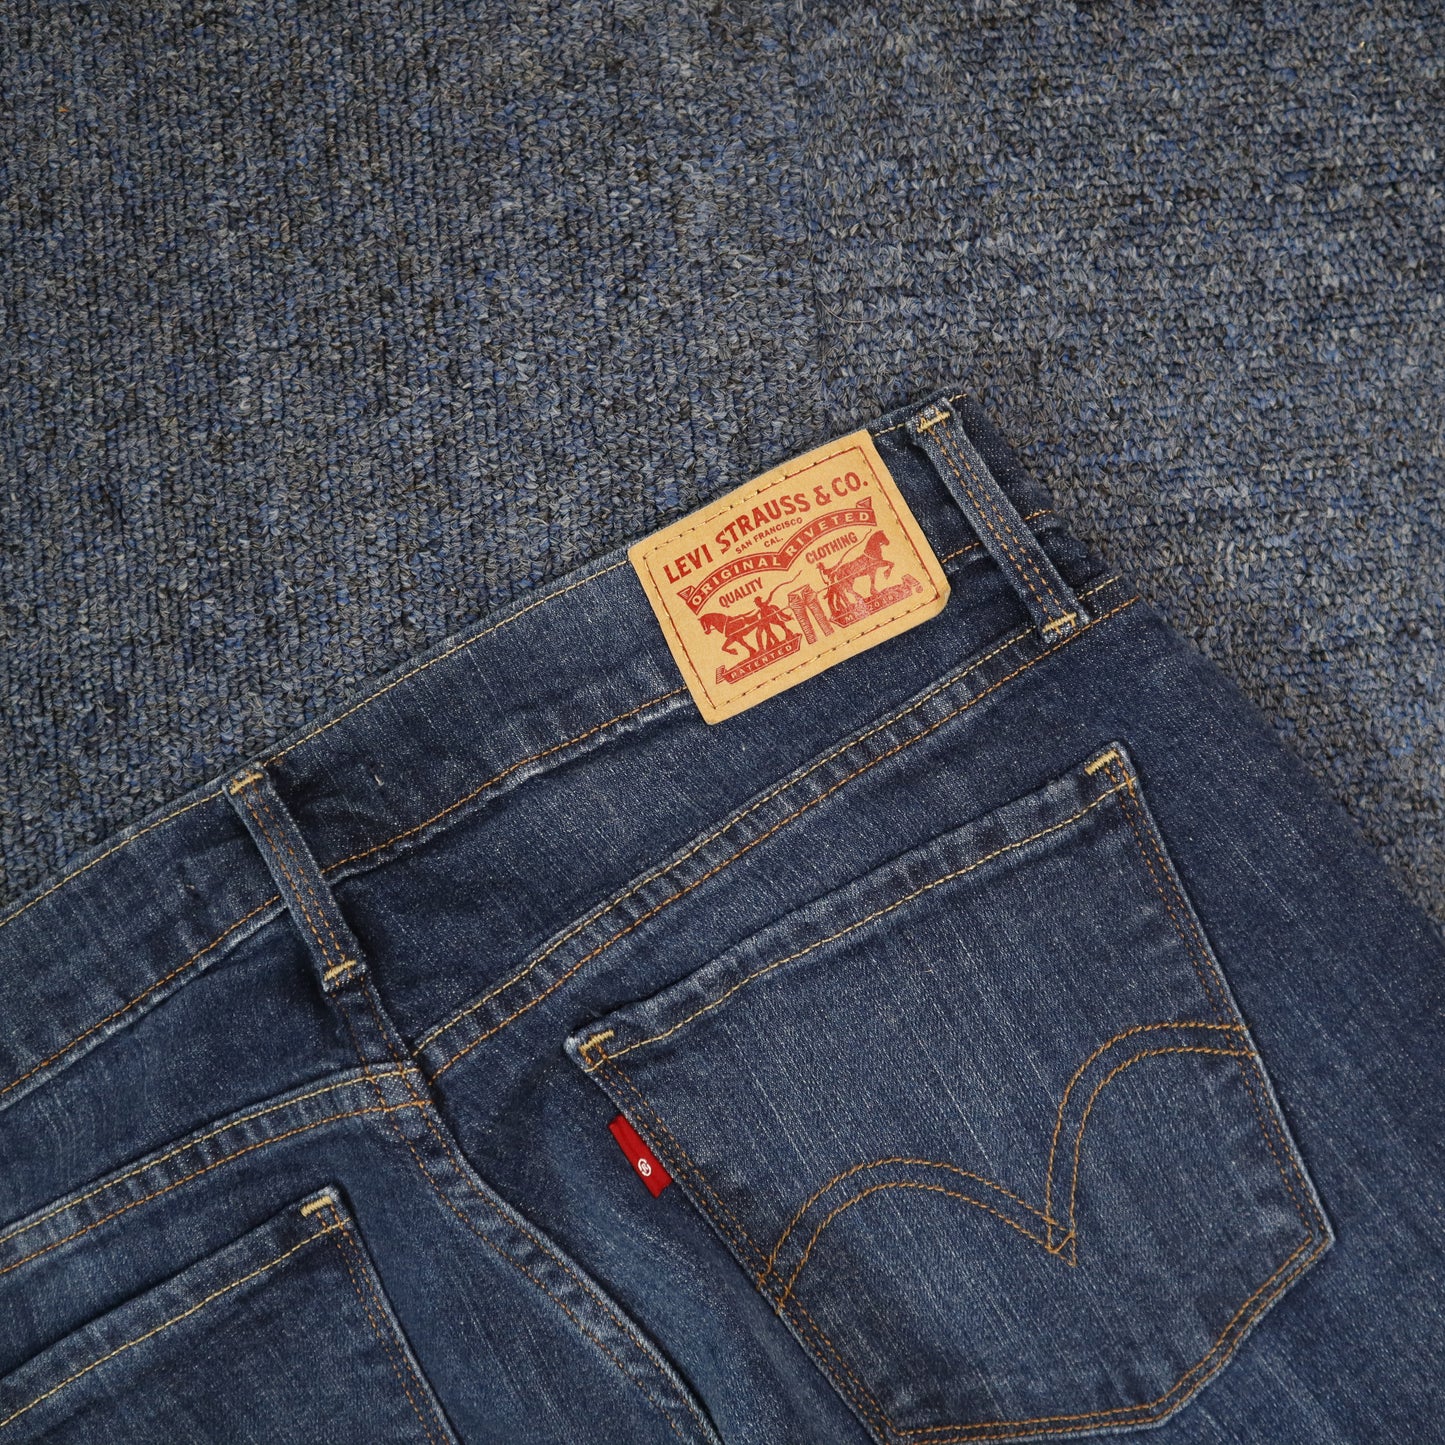 Levi's 505 Straight Cut Jeans